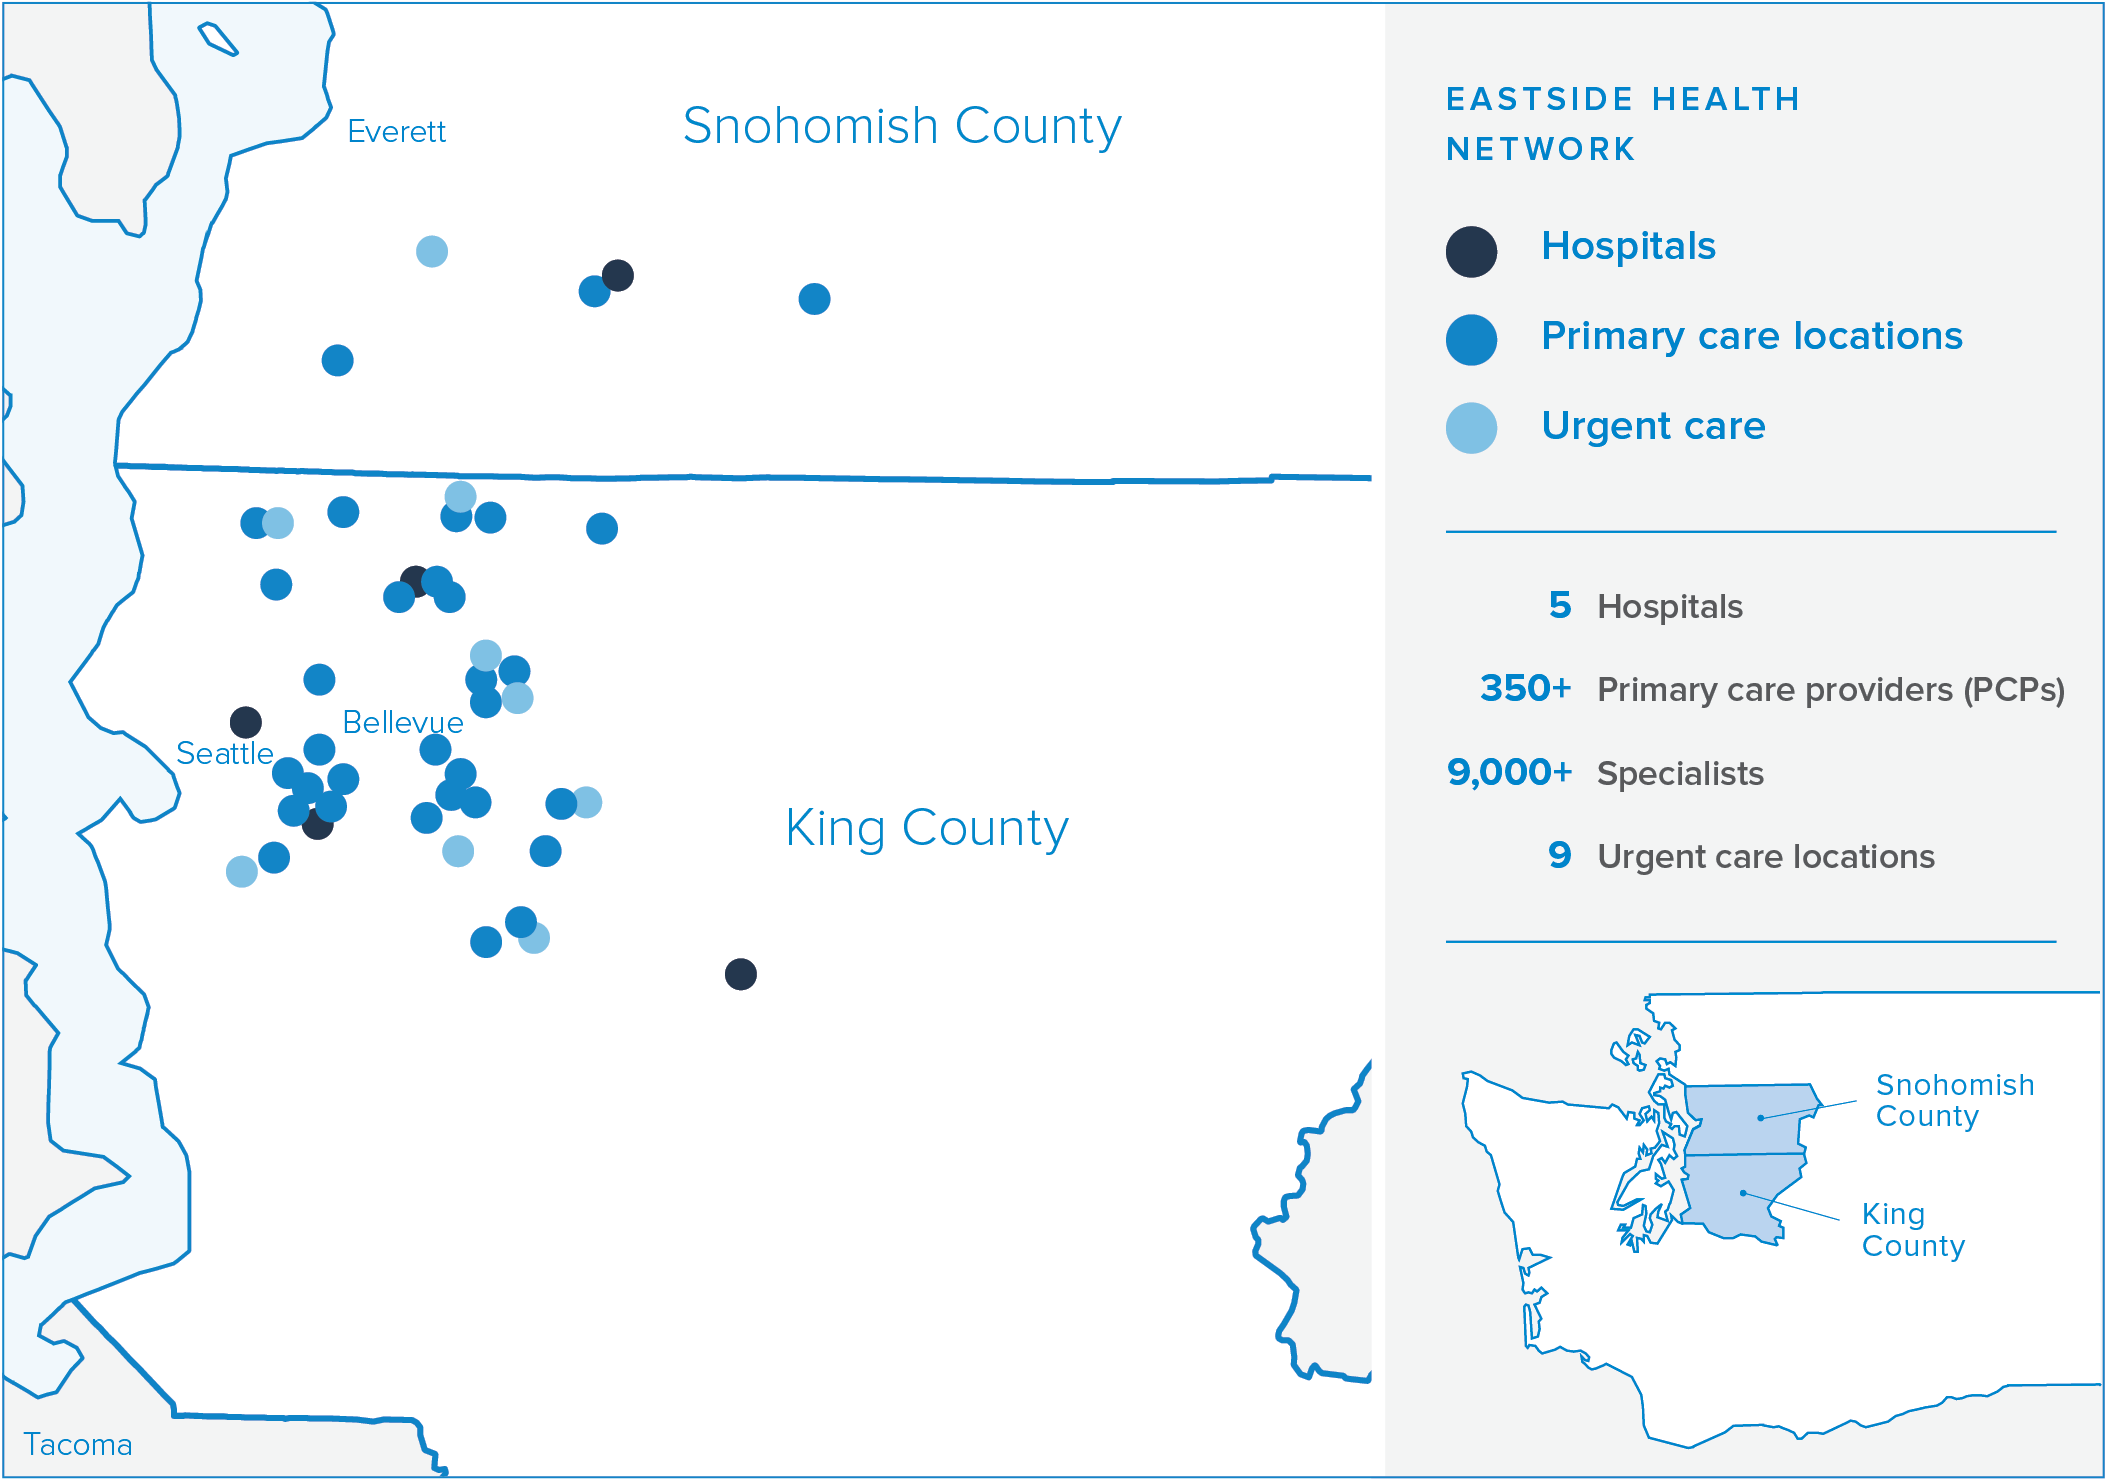 Eastside Health Network map